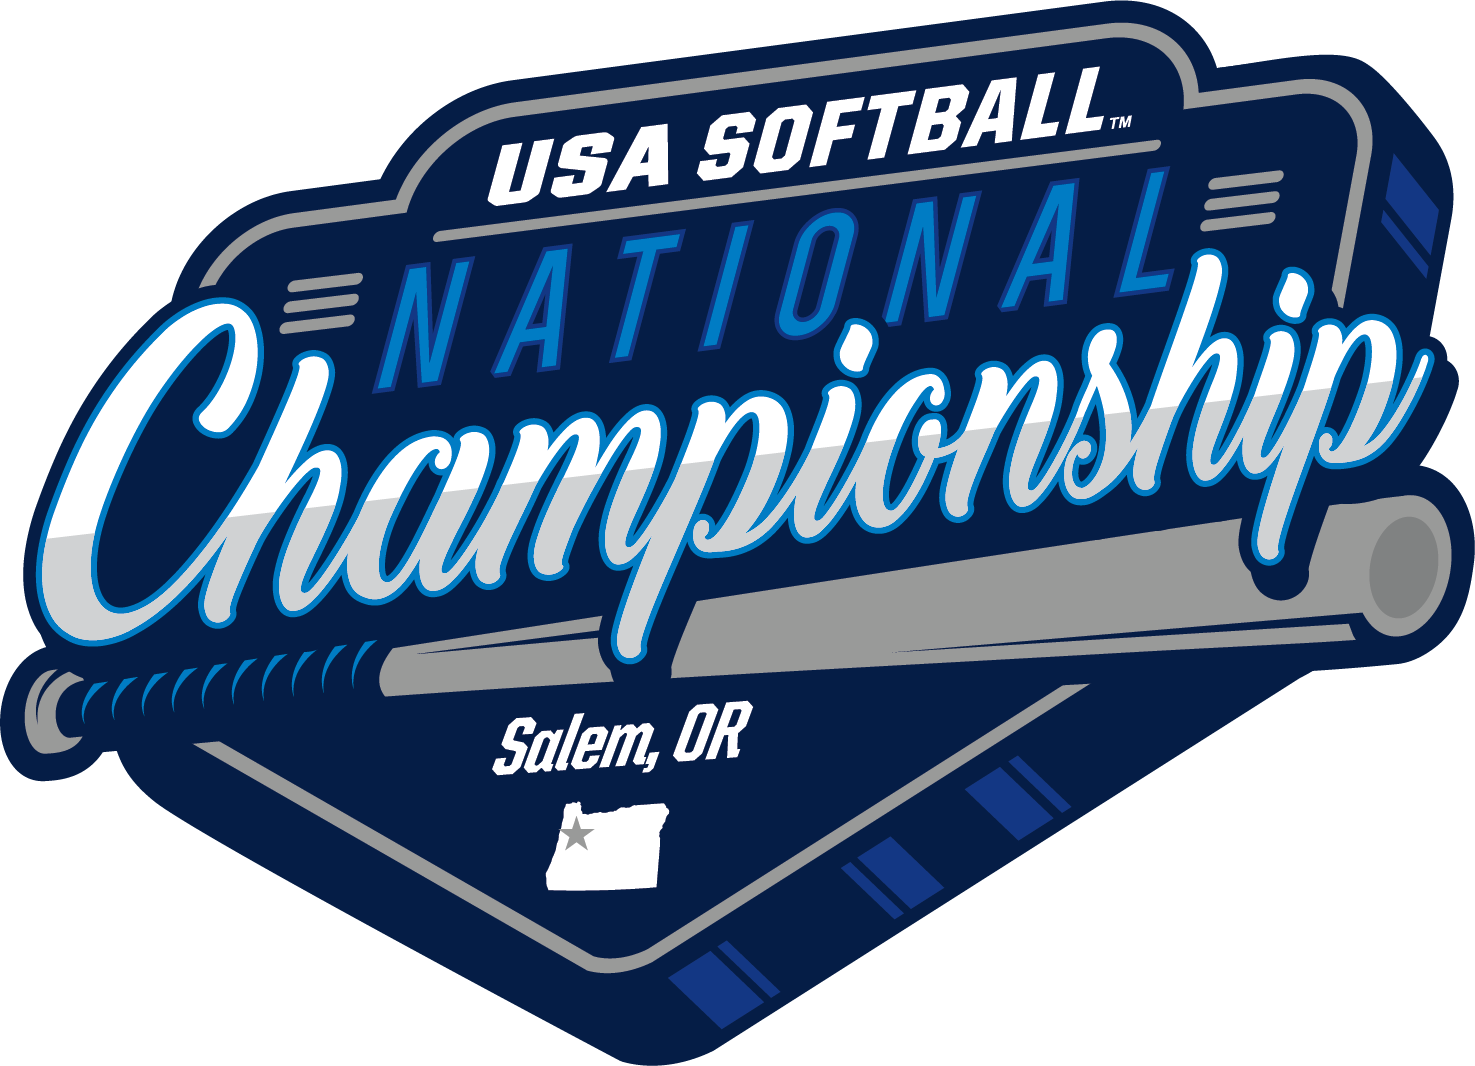 USA-National-Championship-No-tournament-text